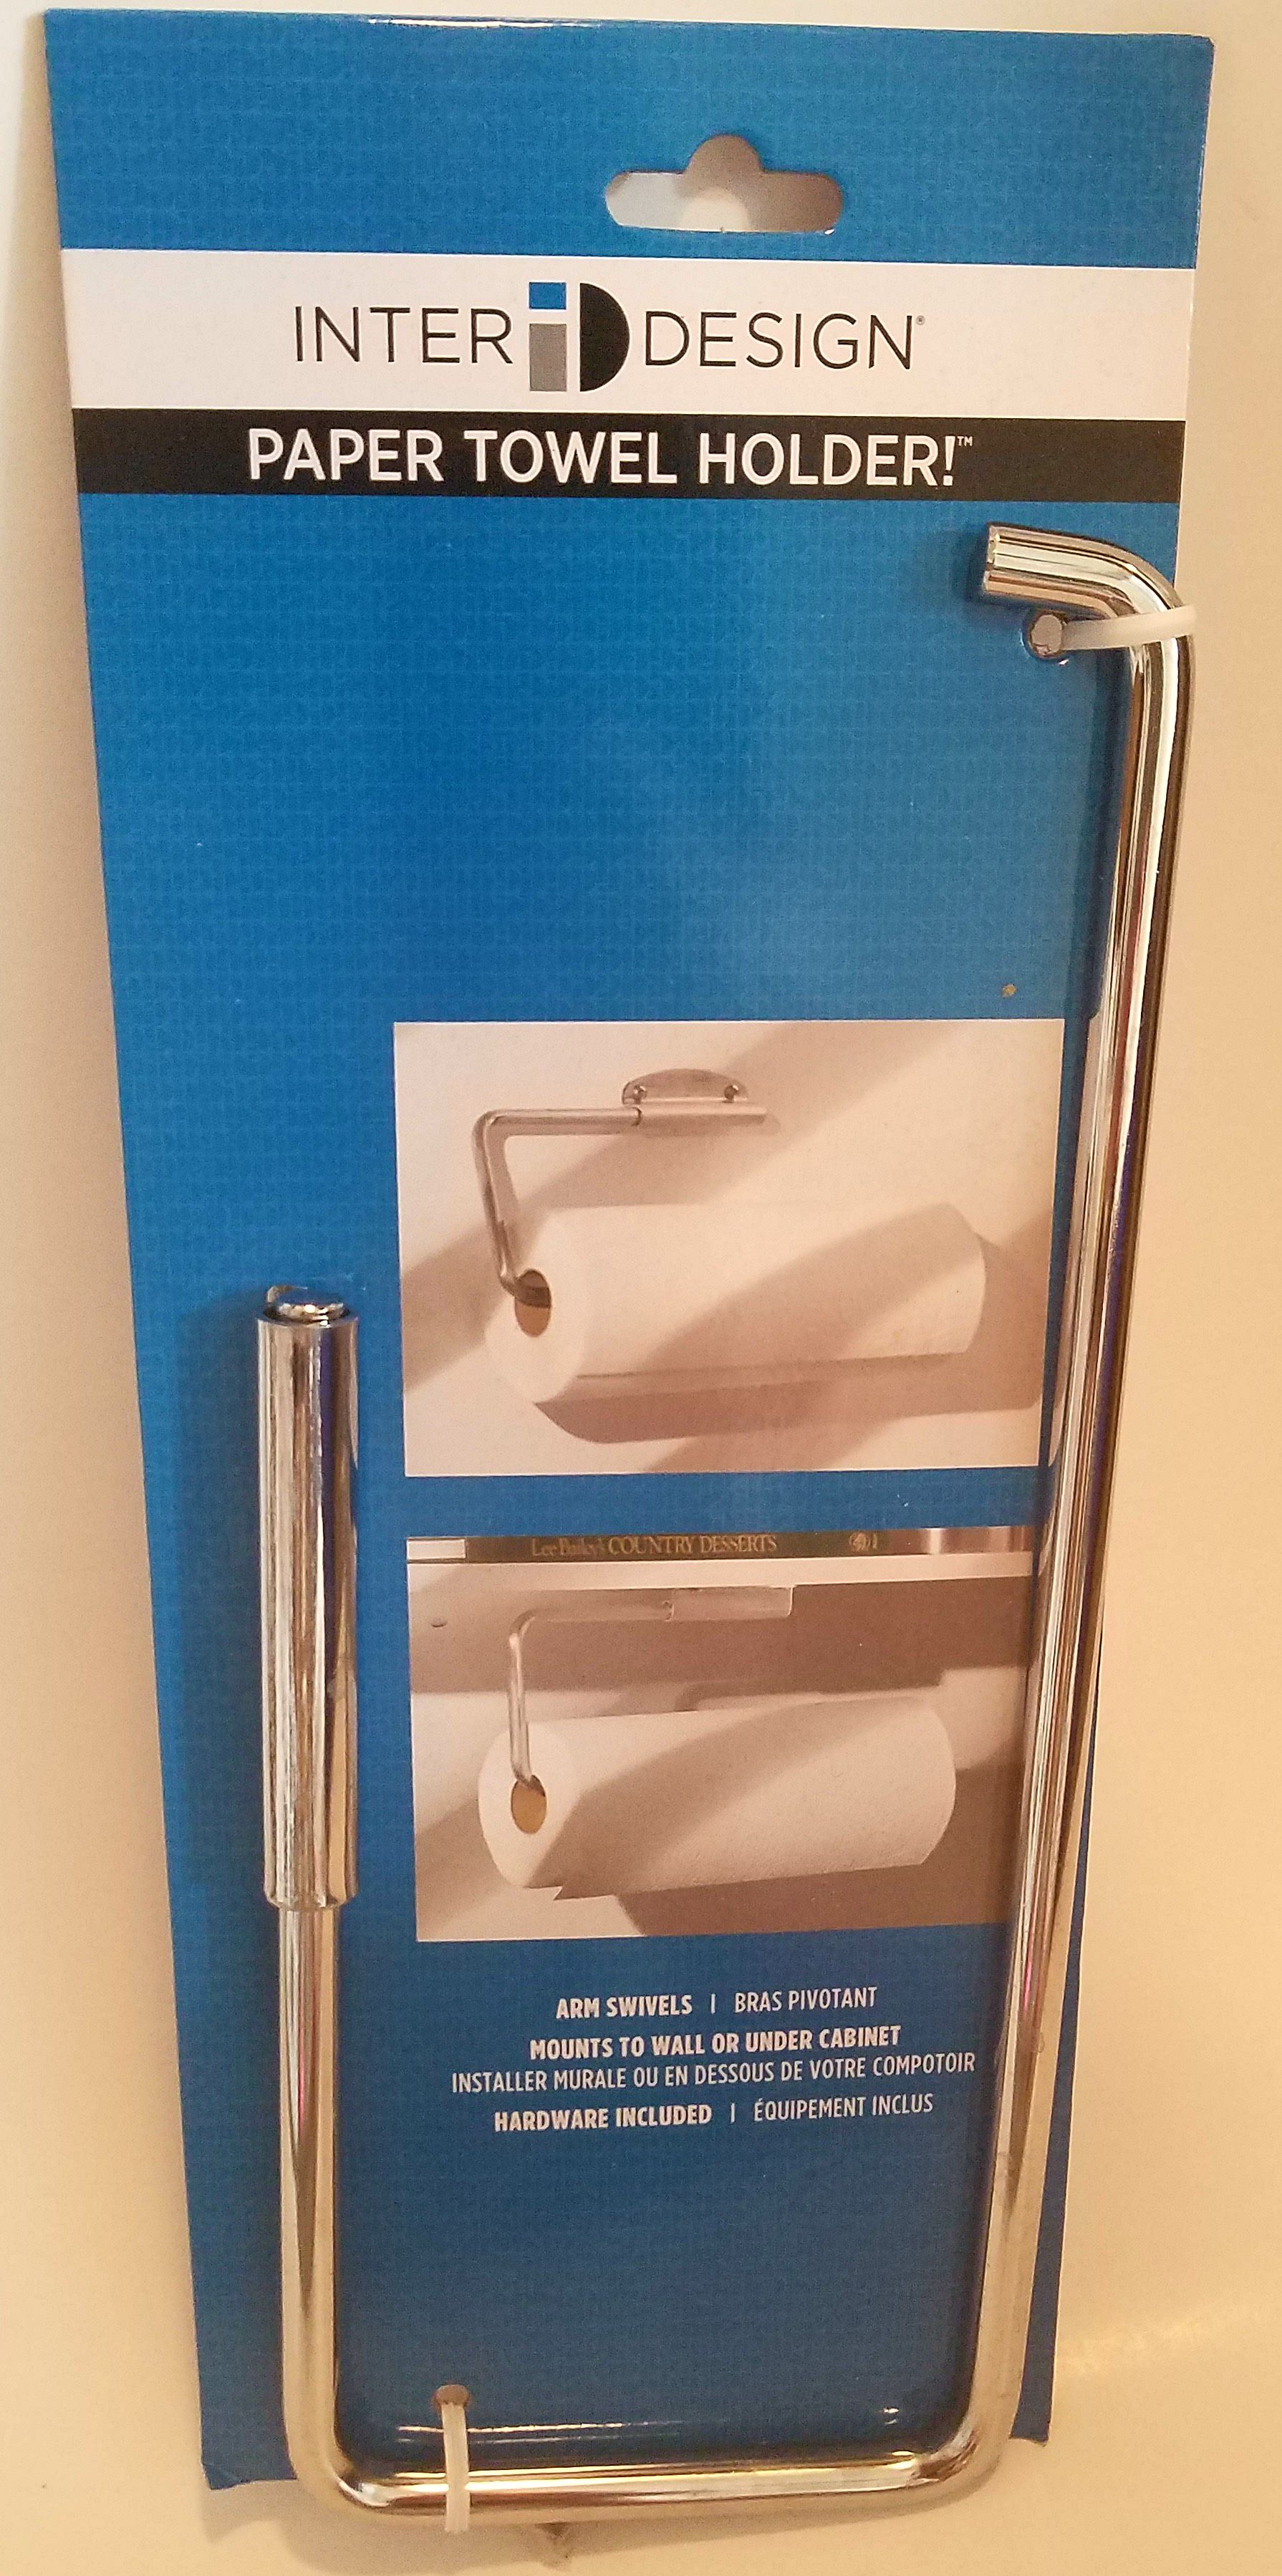 Paper towel holder for kitchen - wall mount or under cabinet mount